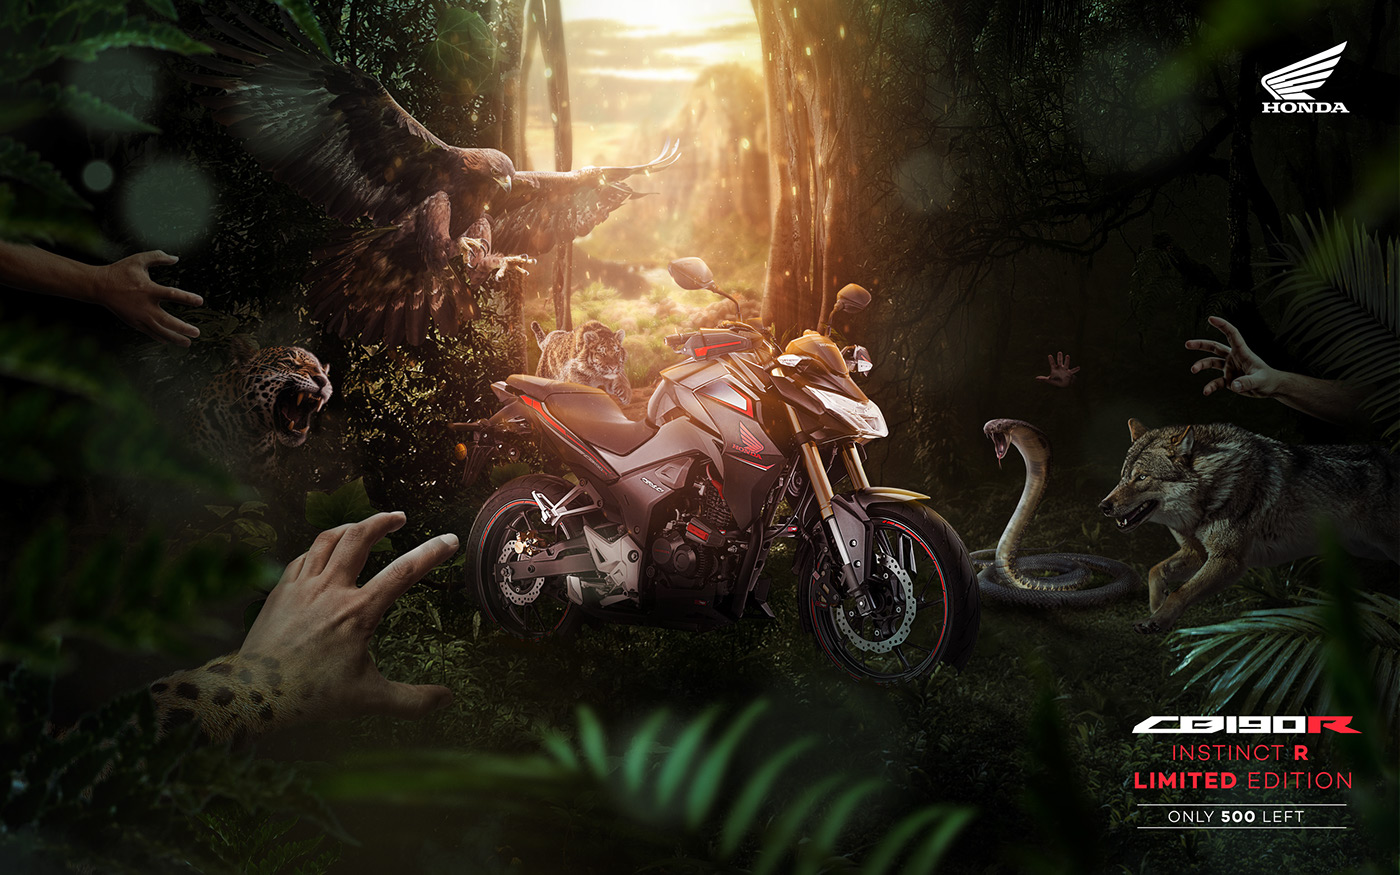 Honda Bike jungle green motorcycle dream animals